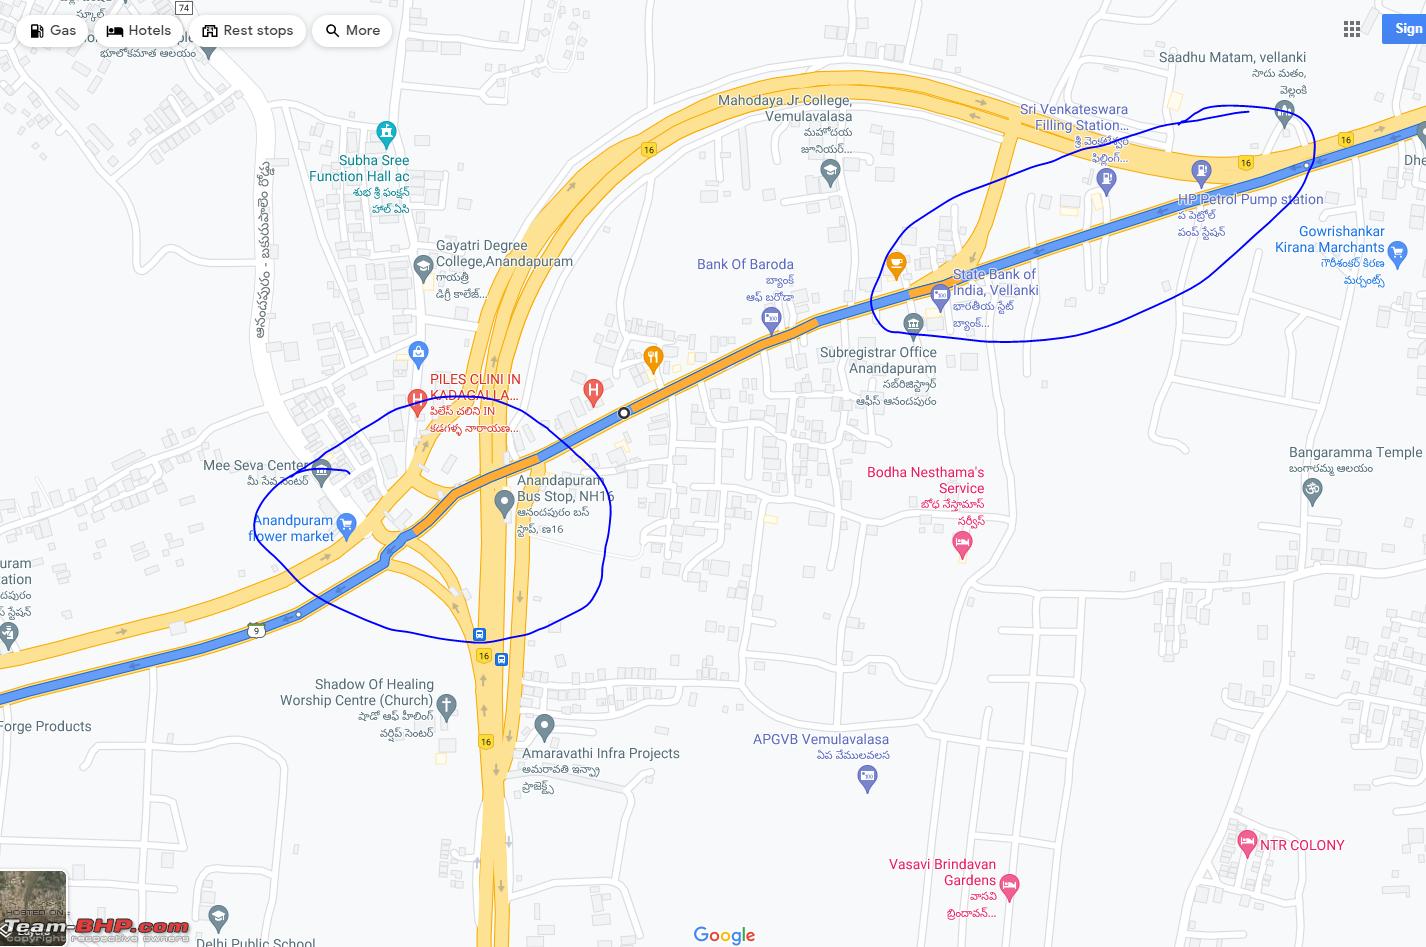 Bangalore Vijayawada Expressway : Construction Cost & Latest updates